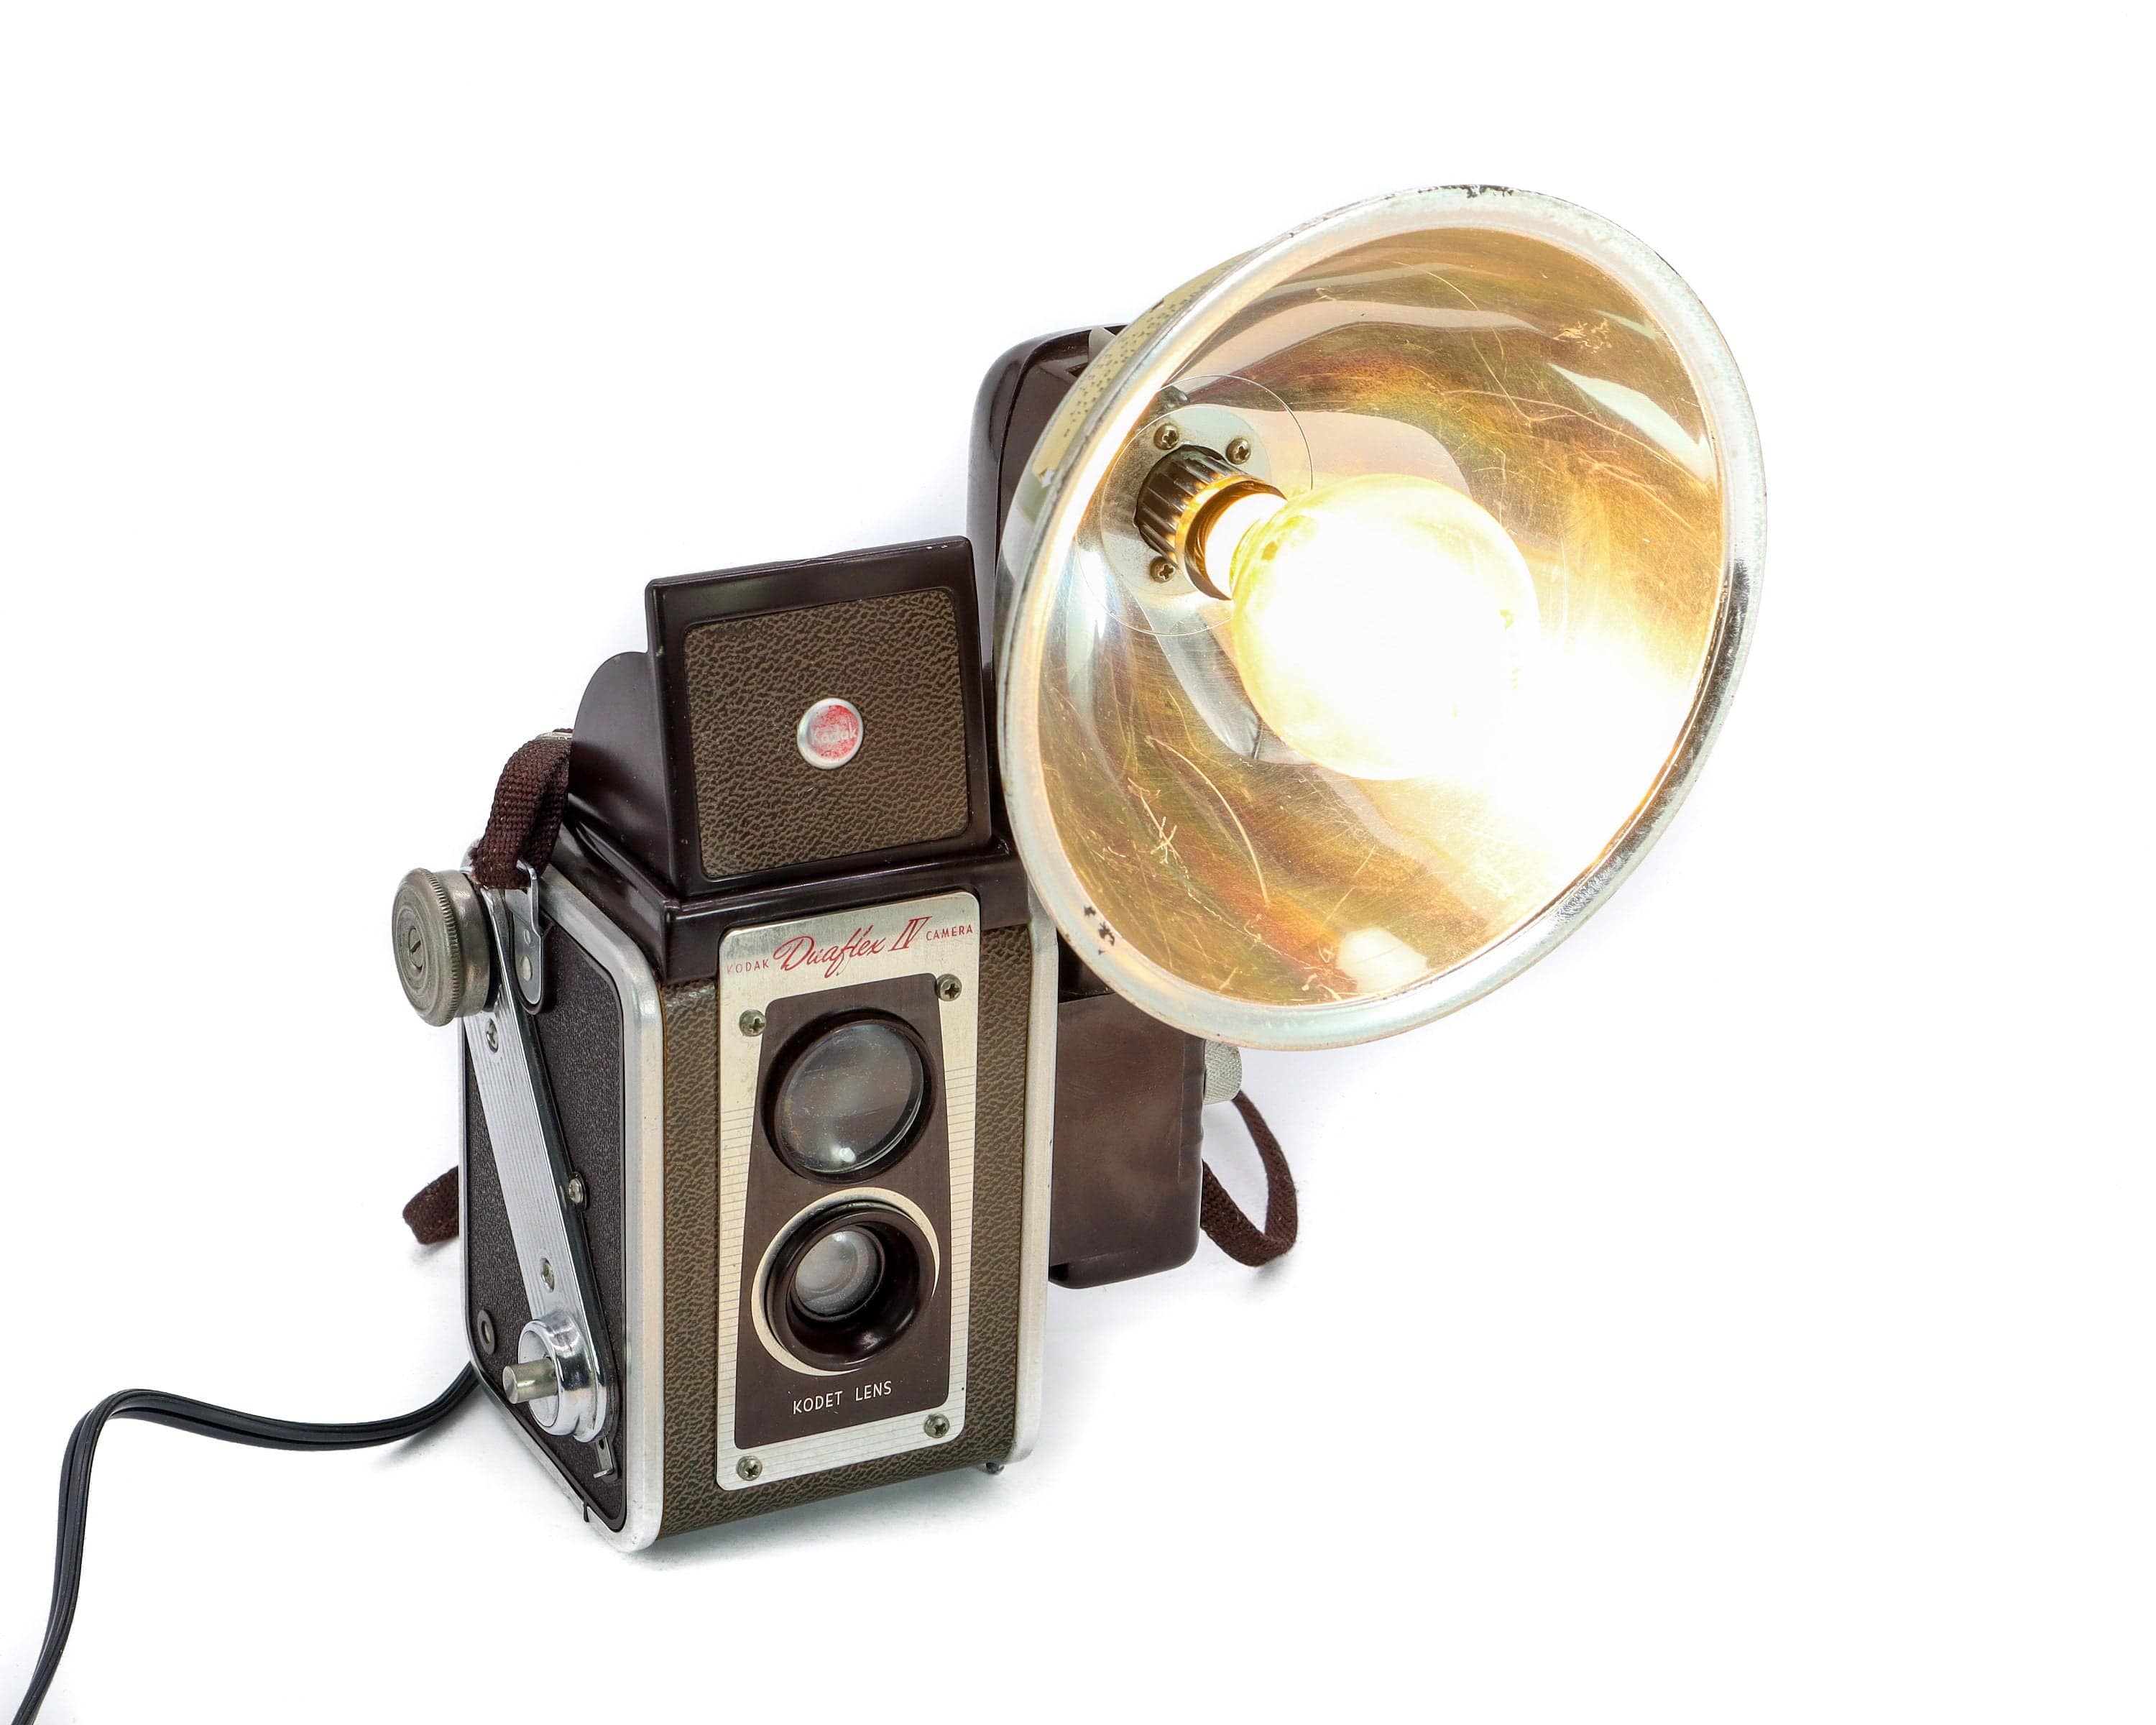 LED Reading Lamp - Kodak Duaflex IV Kodet Lens Vintage Camera